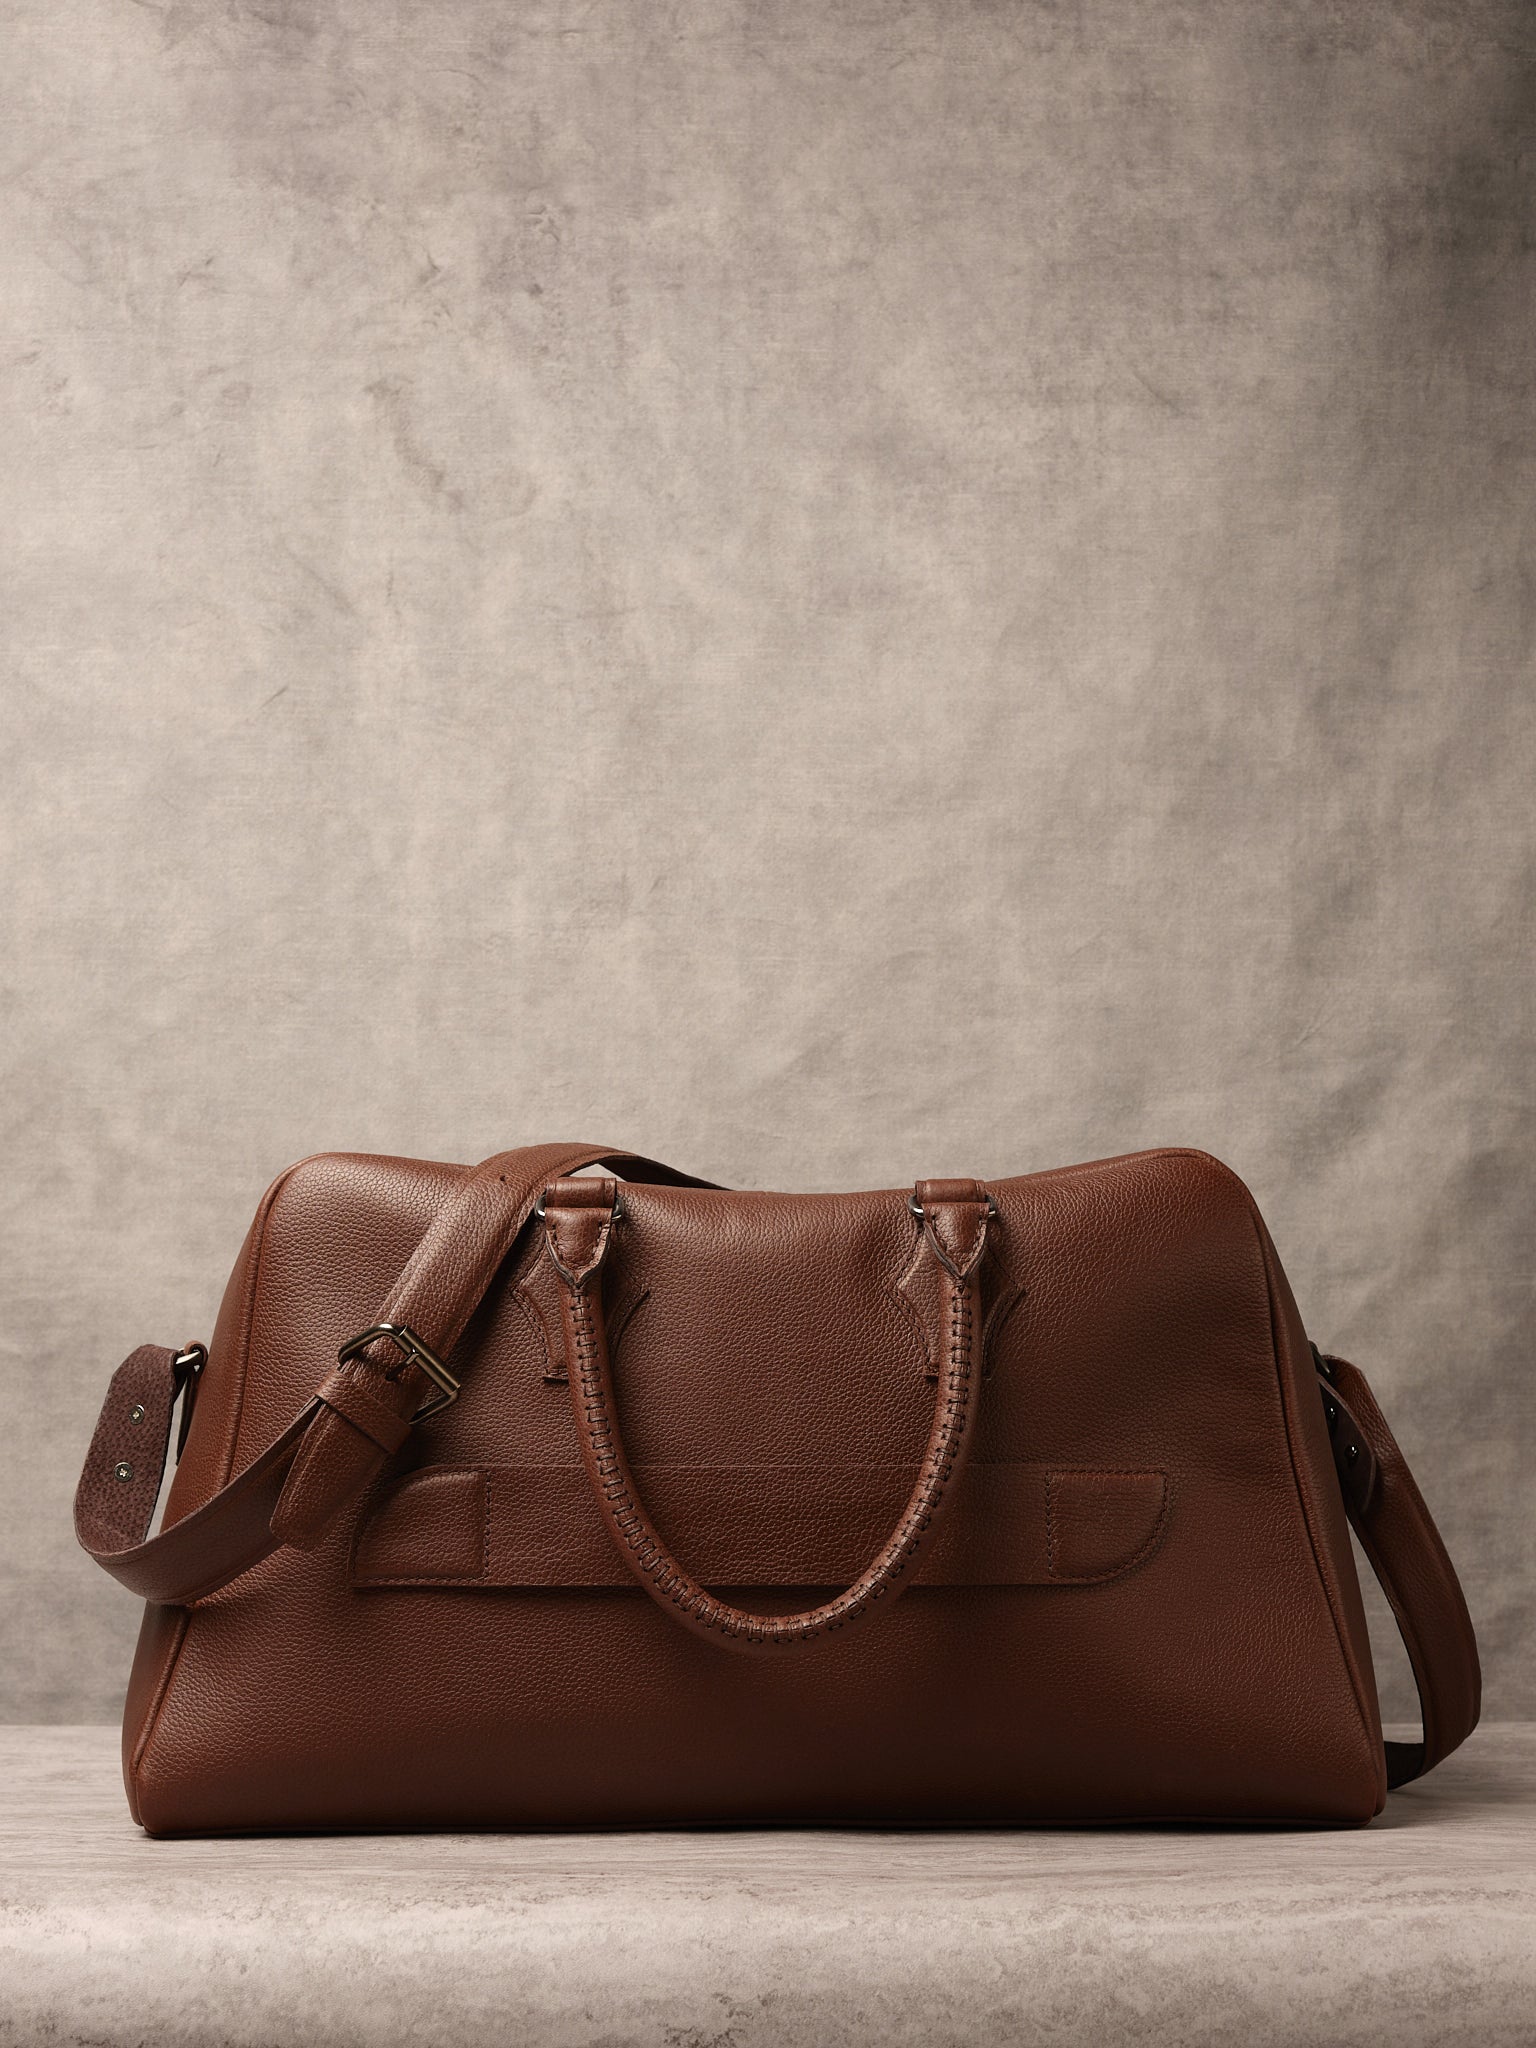 Luggage Strap. Duffle Bag. Weekend Bag Brown by Capra Leather